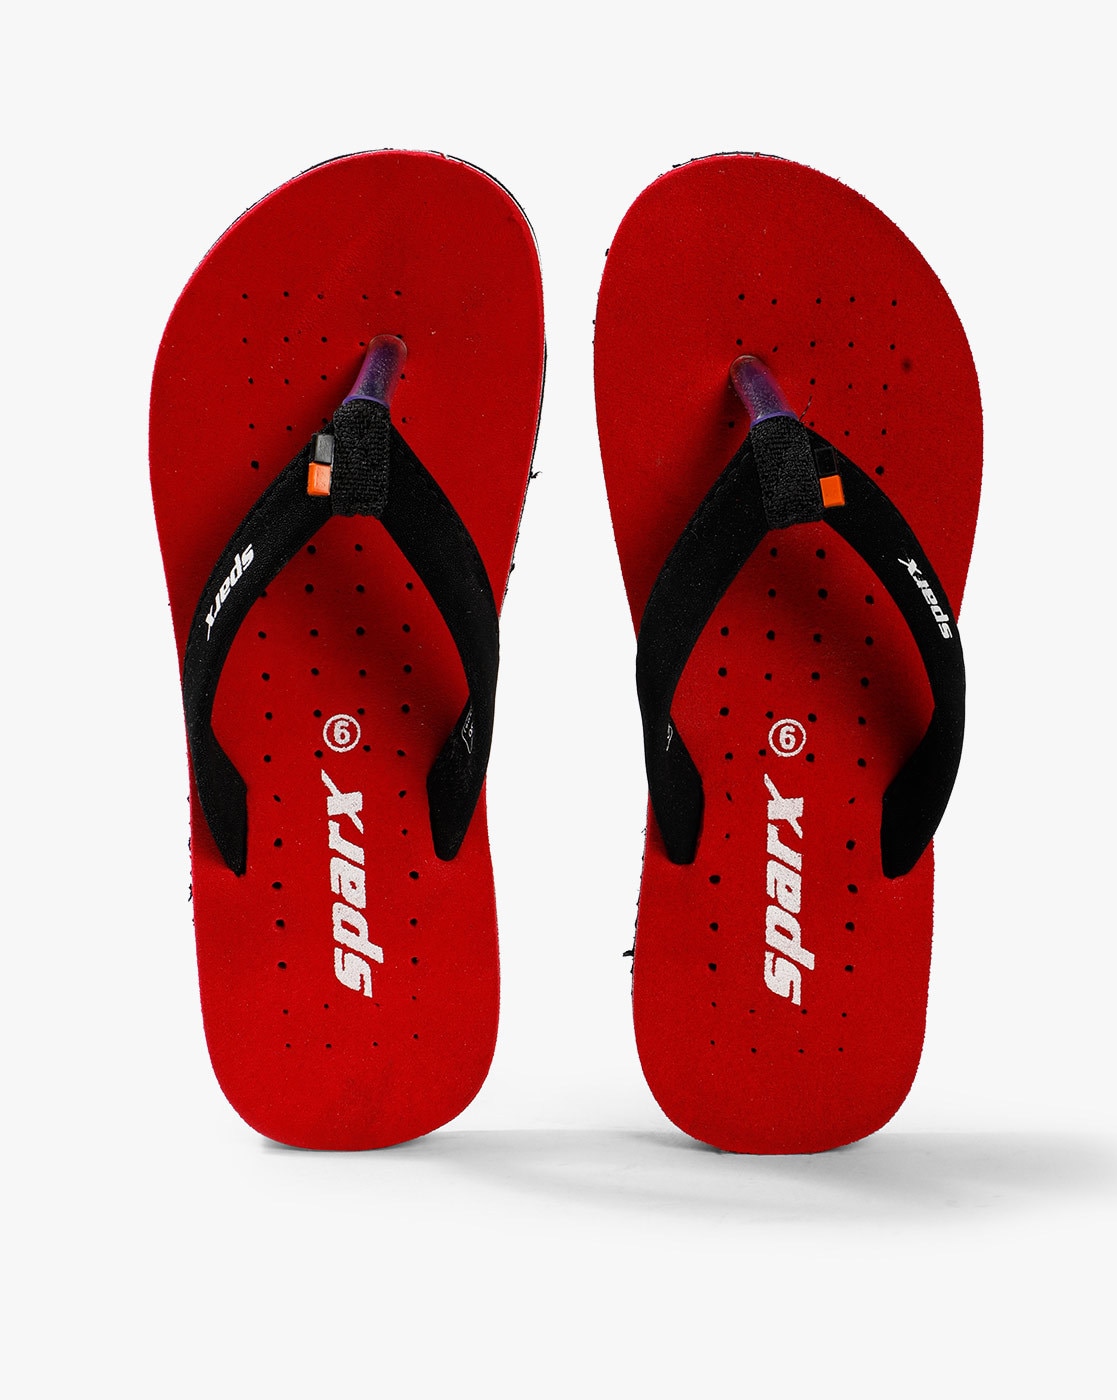 Footwear | Sparx Slippers | Freeup-thanhphatduhoc.com.vn